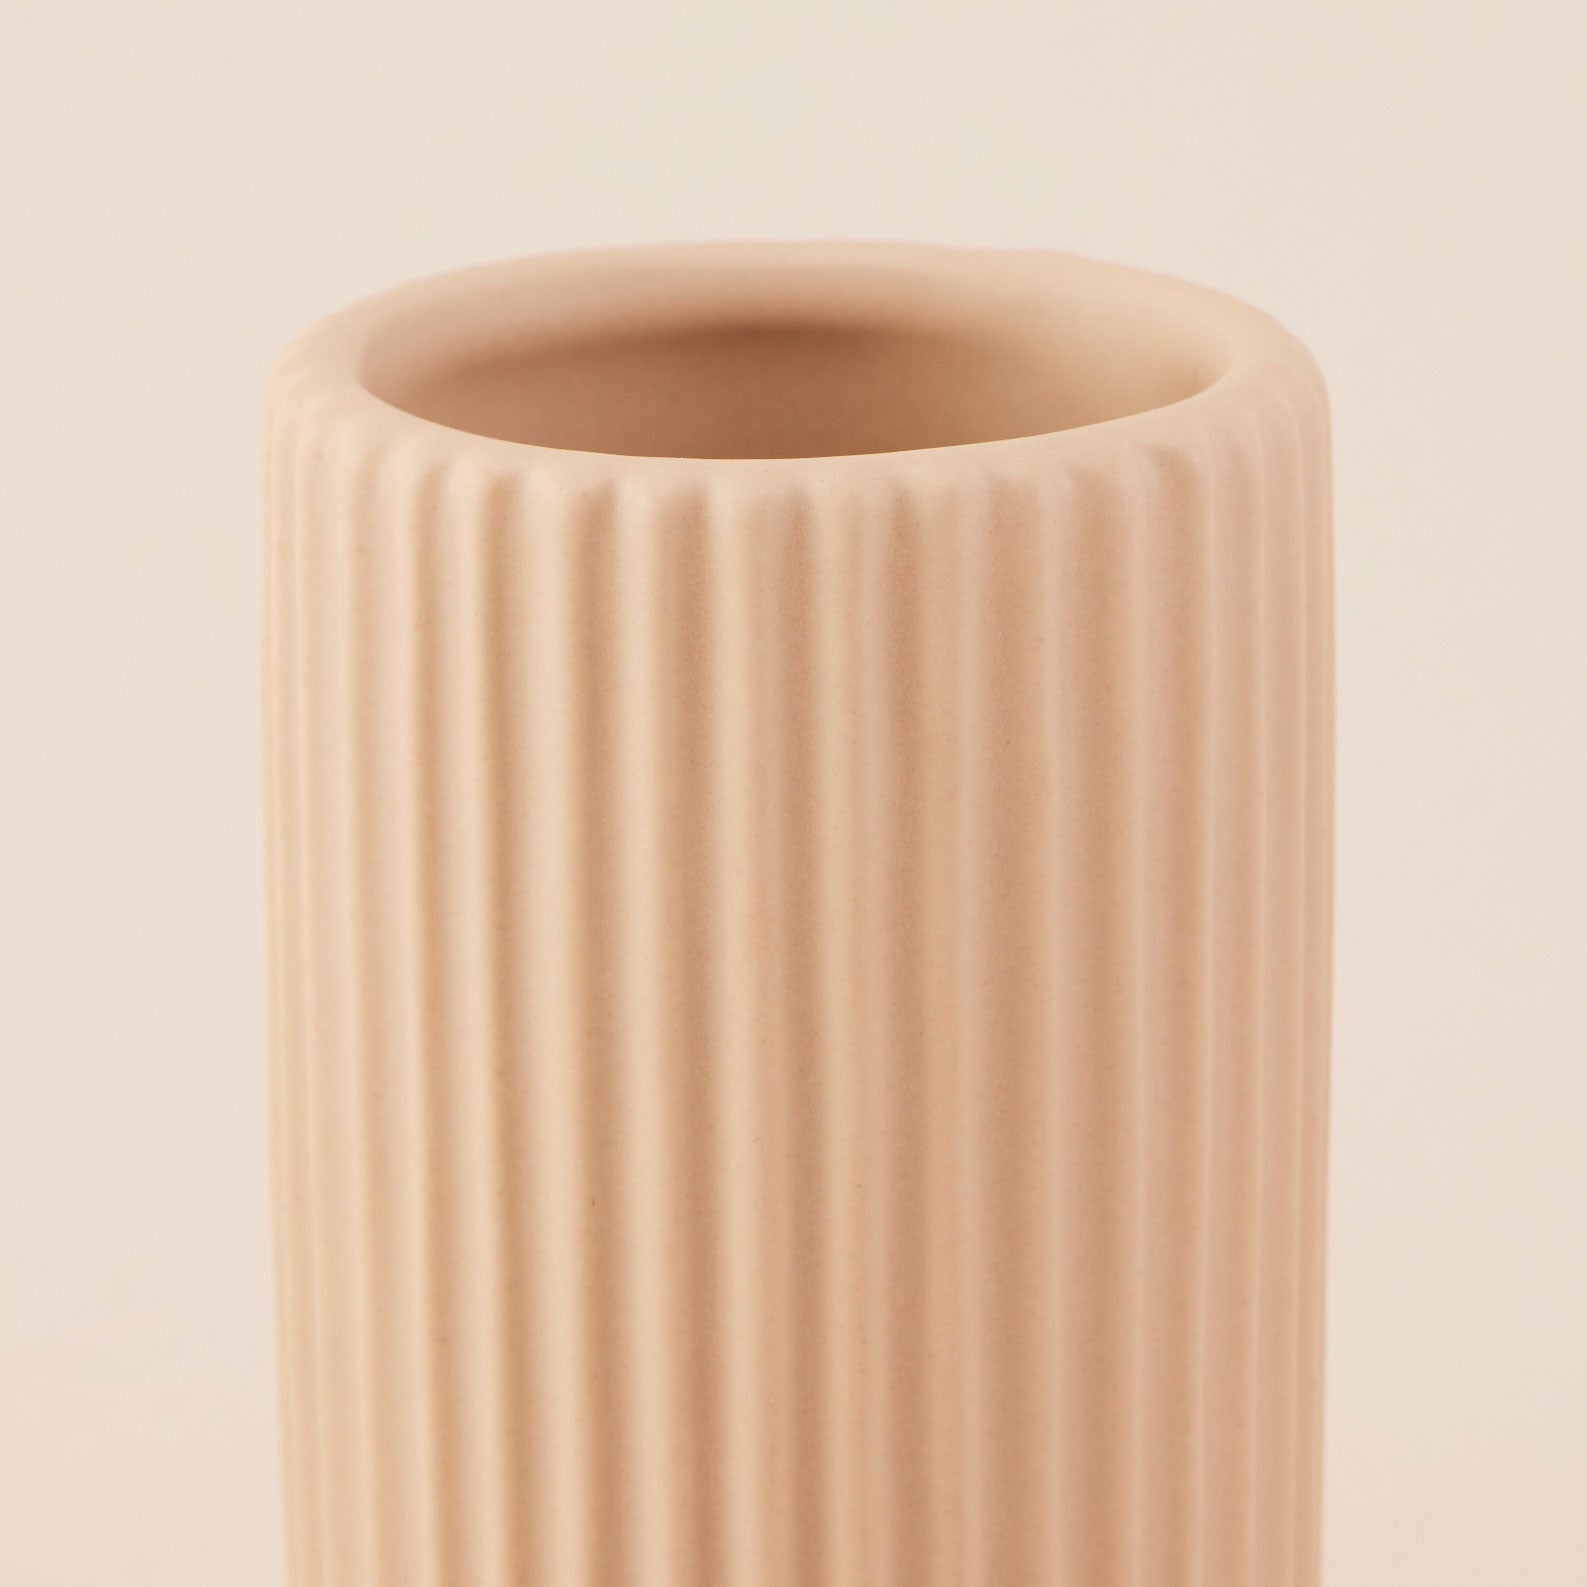 Round Porcelain Vase | แจกัน